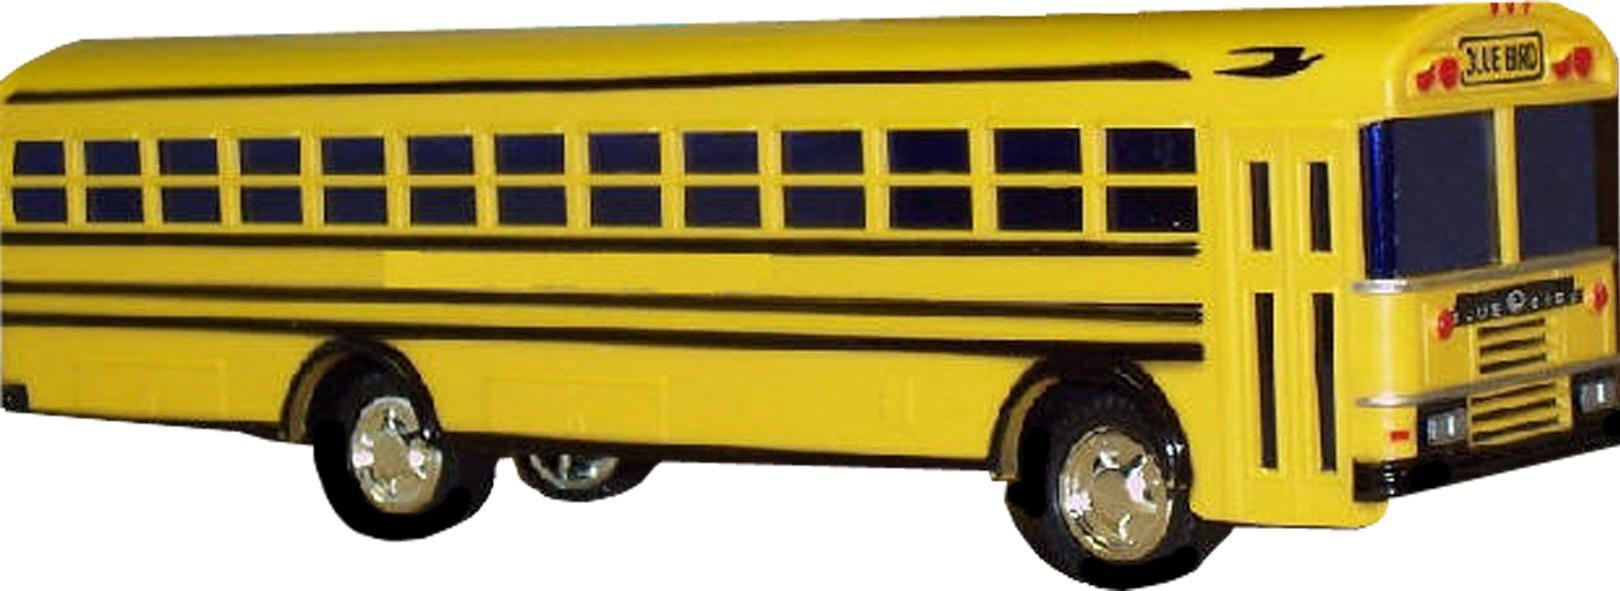 Blue Bird with Yellow Logo - Blue Bird Model School Bus| model,bus,bus,bank,bus,bank,promotion ...